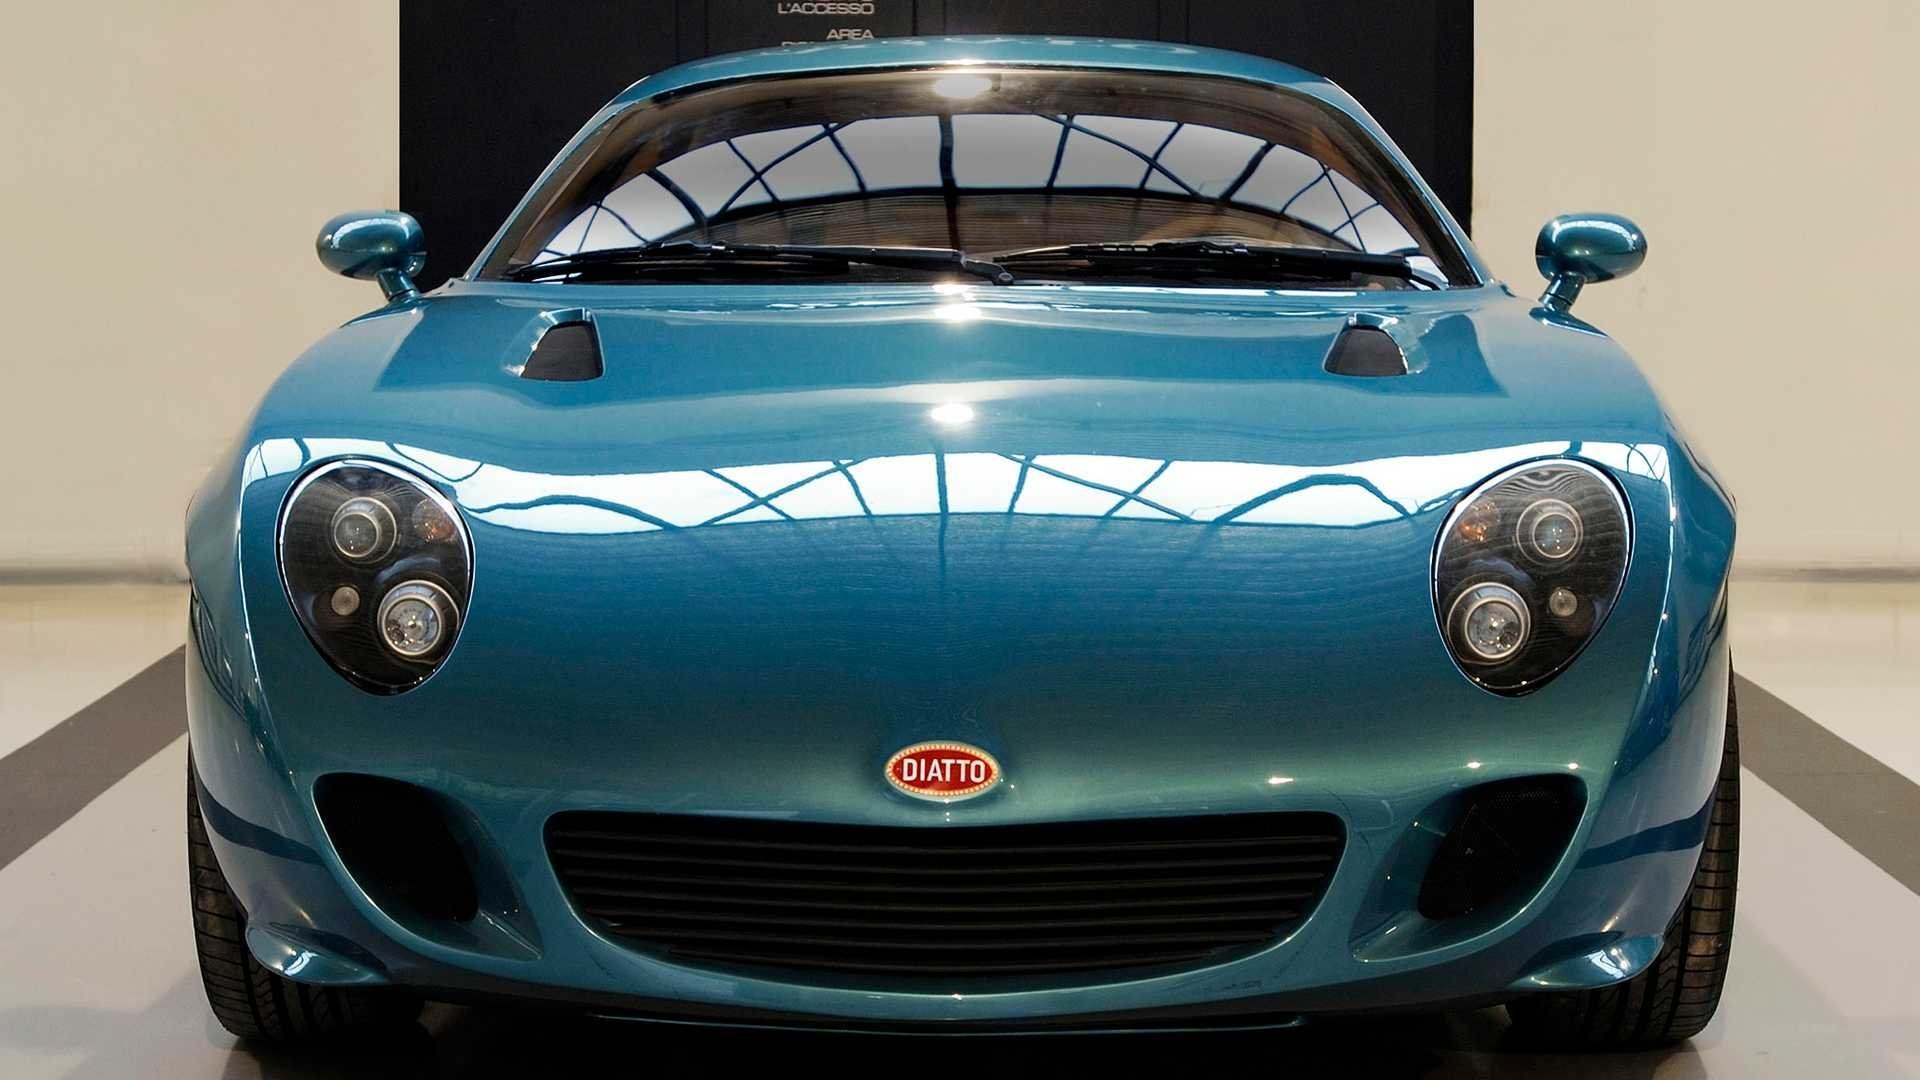 1 название машины. Spyker c12 Zagato. Diatto Ottovu Project by Zagato 2007. Редкие марки автомобилей. Итальянские марки автомобилей.